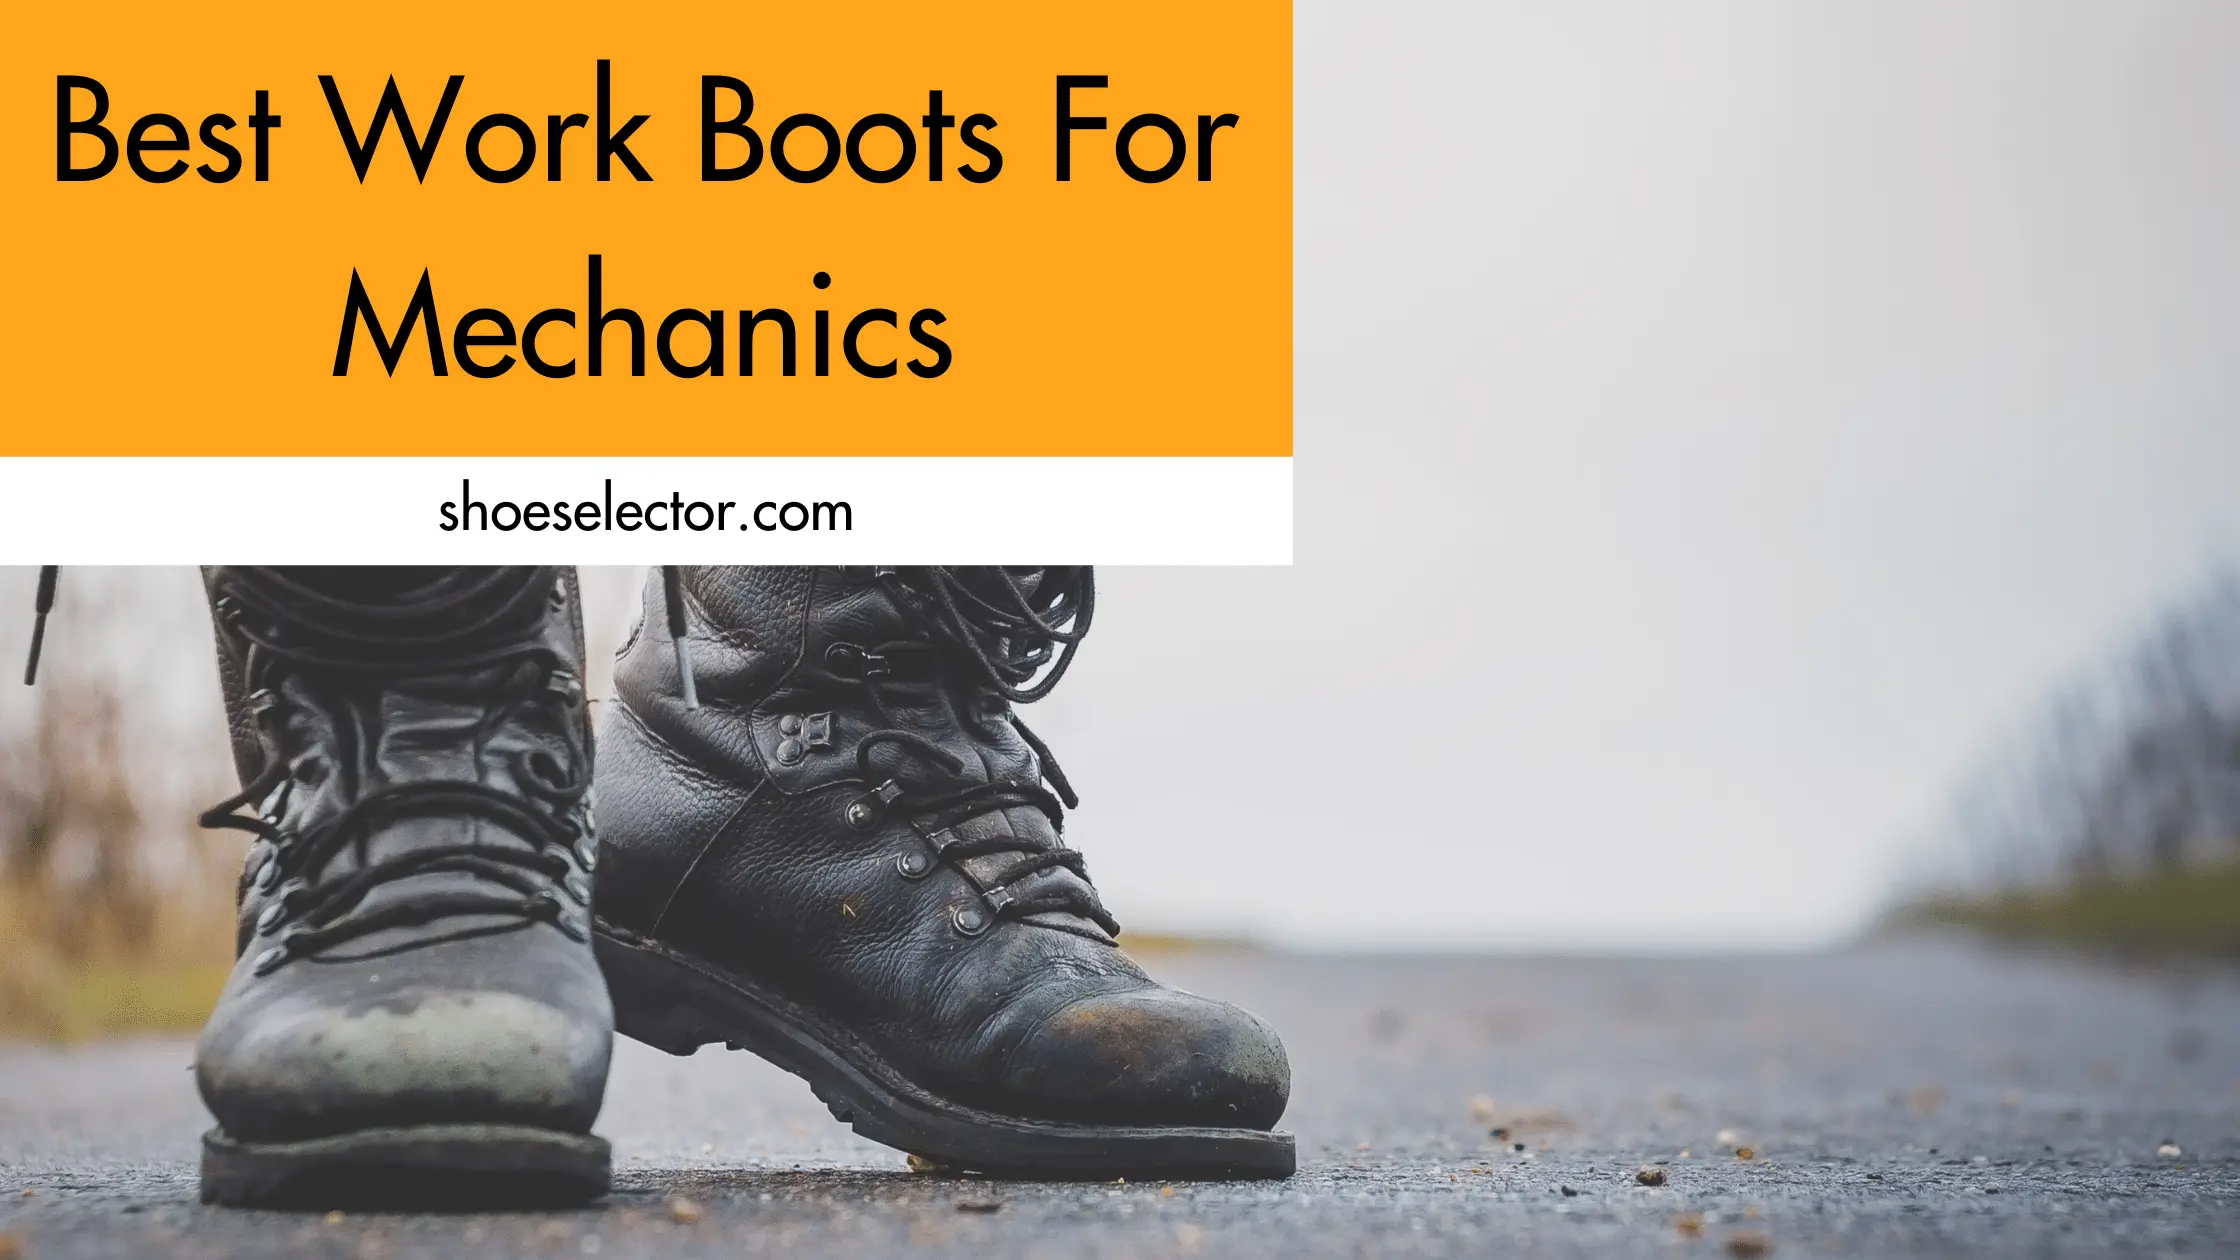 Best Work Boots For Mechanics - Comprehensive Guide